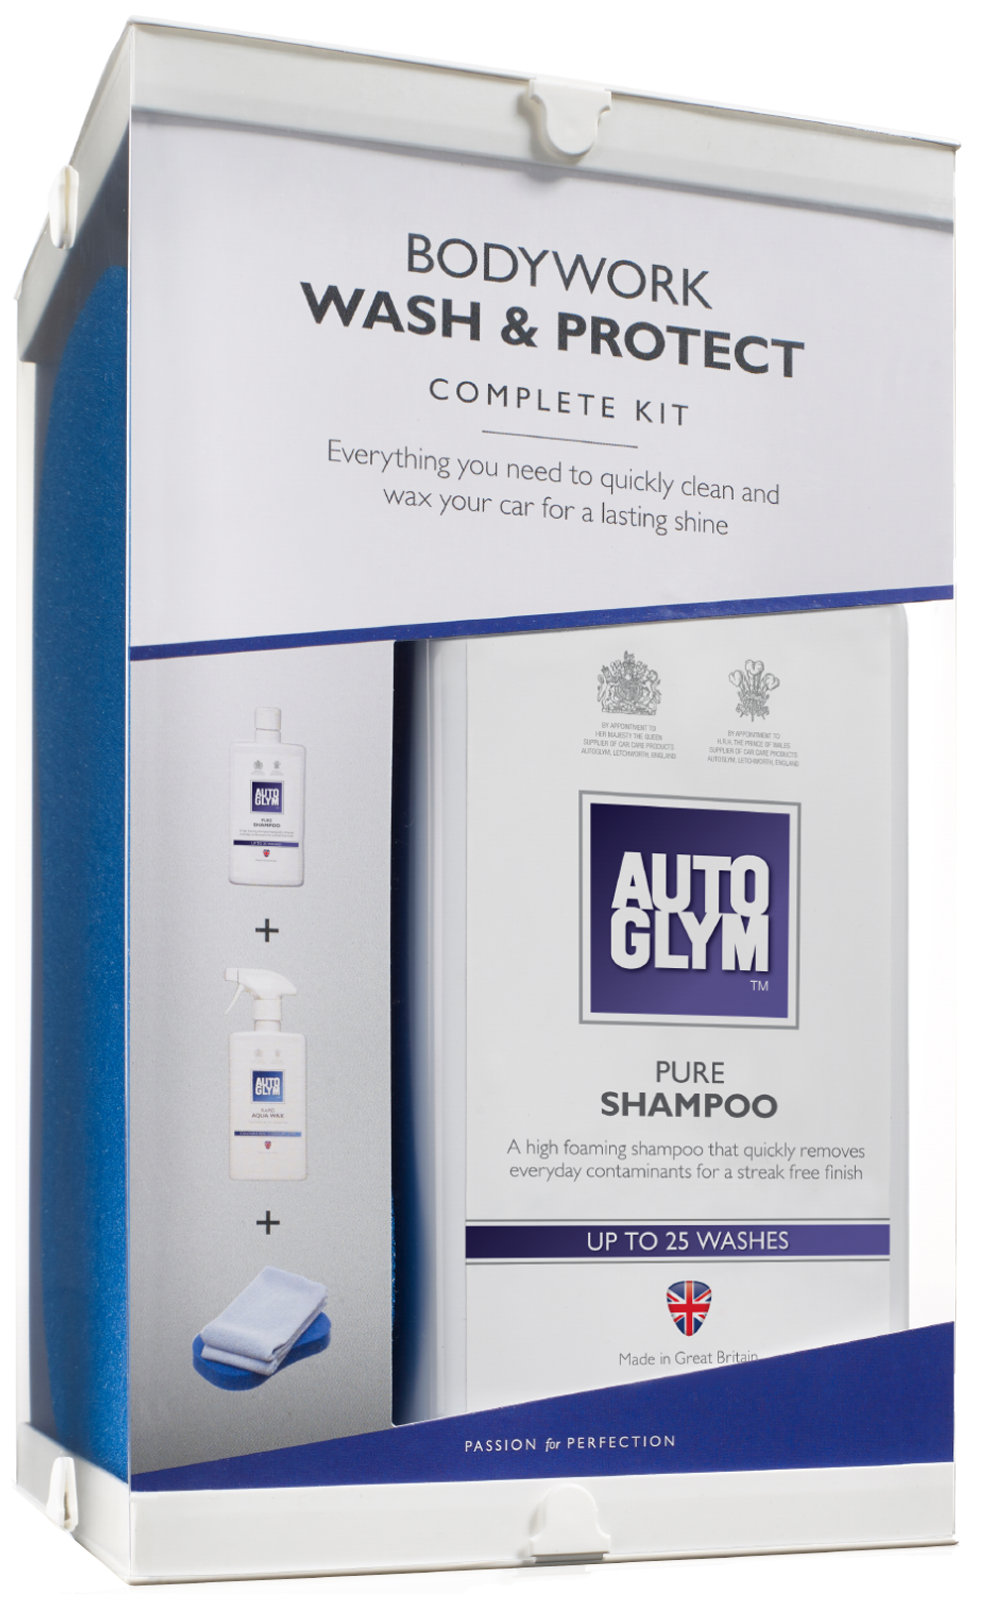 Auto Glym - Bodywork Wash & Protect Complete Kit